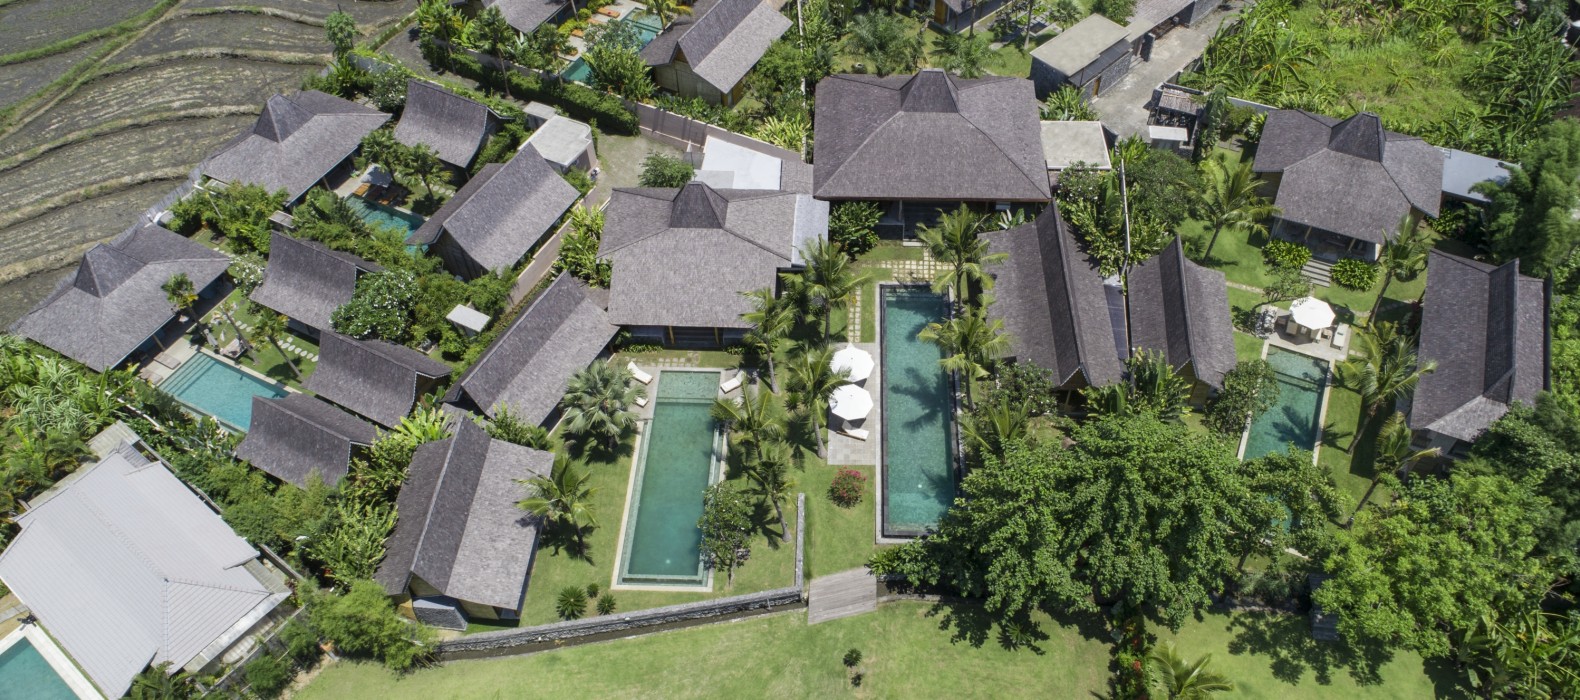 Exterior villa view of Villa Manoa in Bali